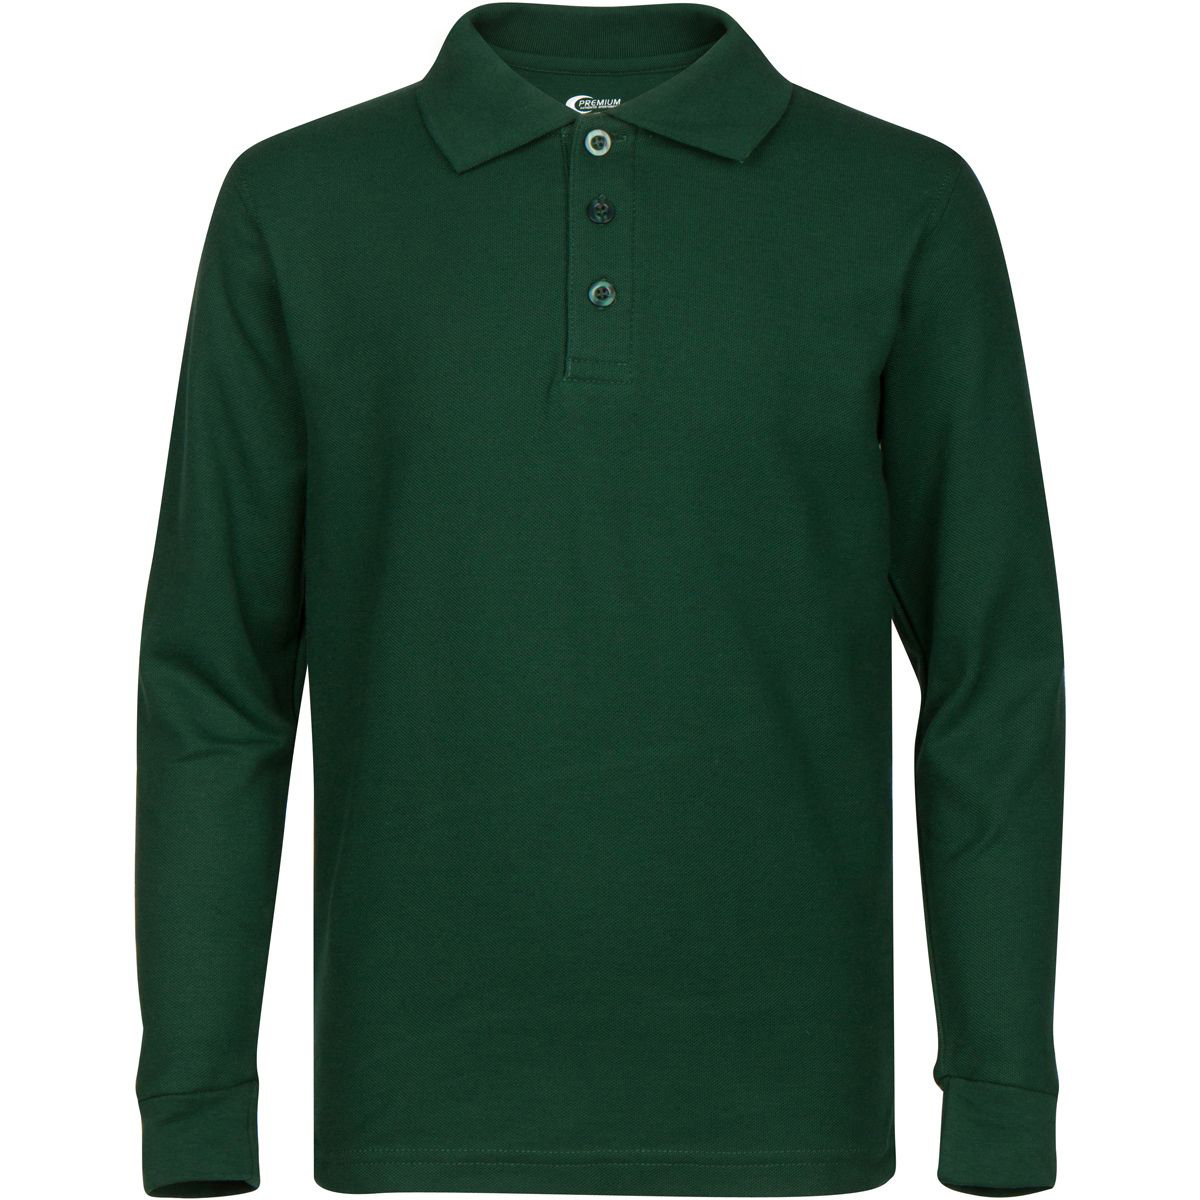 Boy's School UNIFORM Long-Sleeve Shirts - Hunter Green - Choose Your Sizes (3/4-18/20)